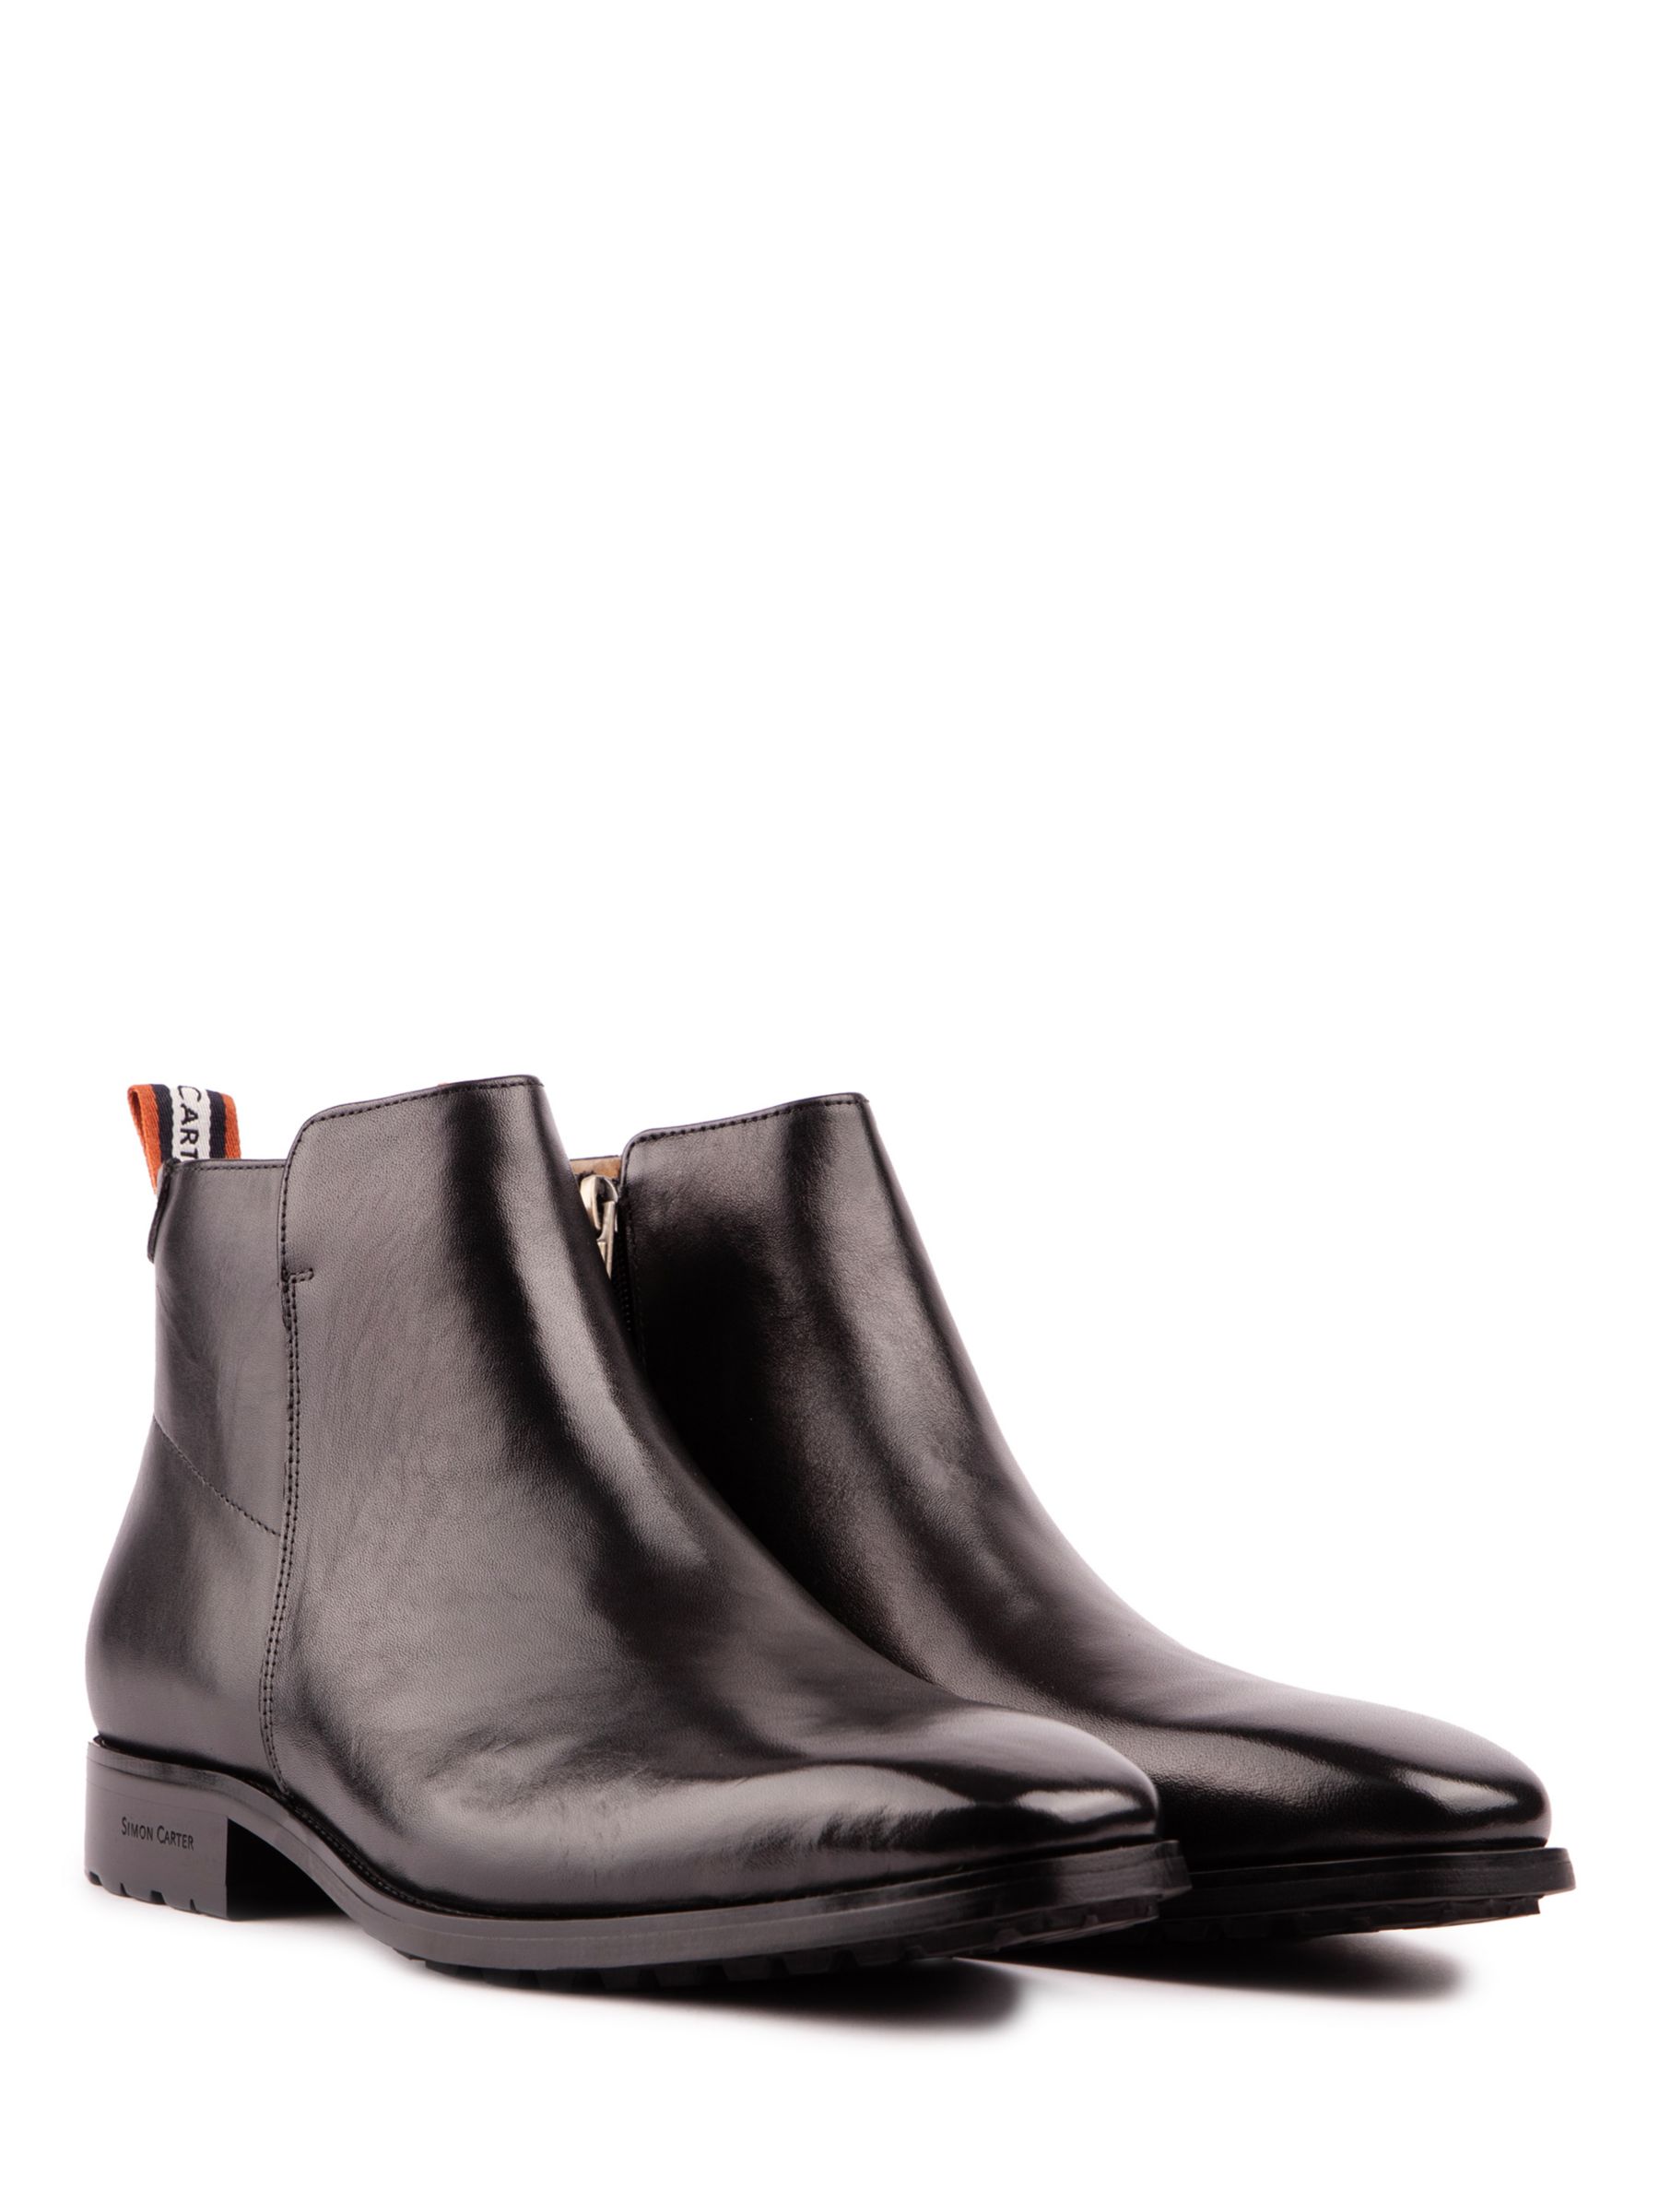 Simon Carter Primrose Leather Chelsea Boots, Black, 7